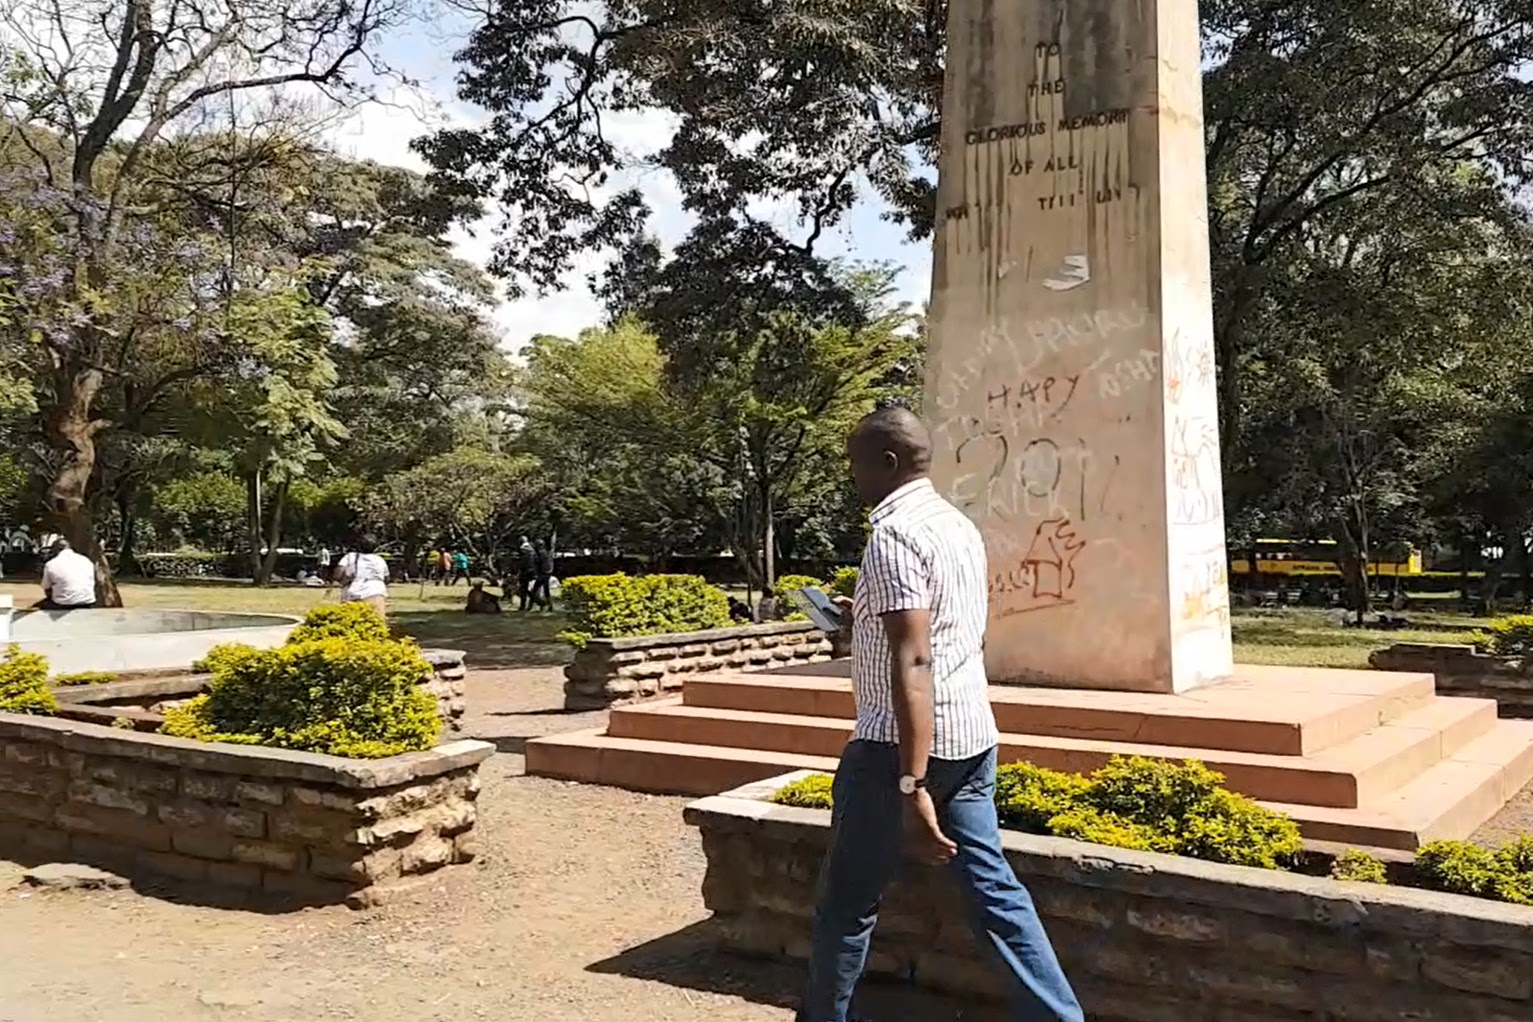 Nyayo Gardens Park, the major urban greenspace in Nakuru, Kenya.